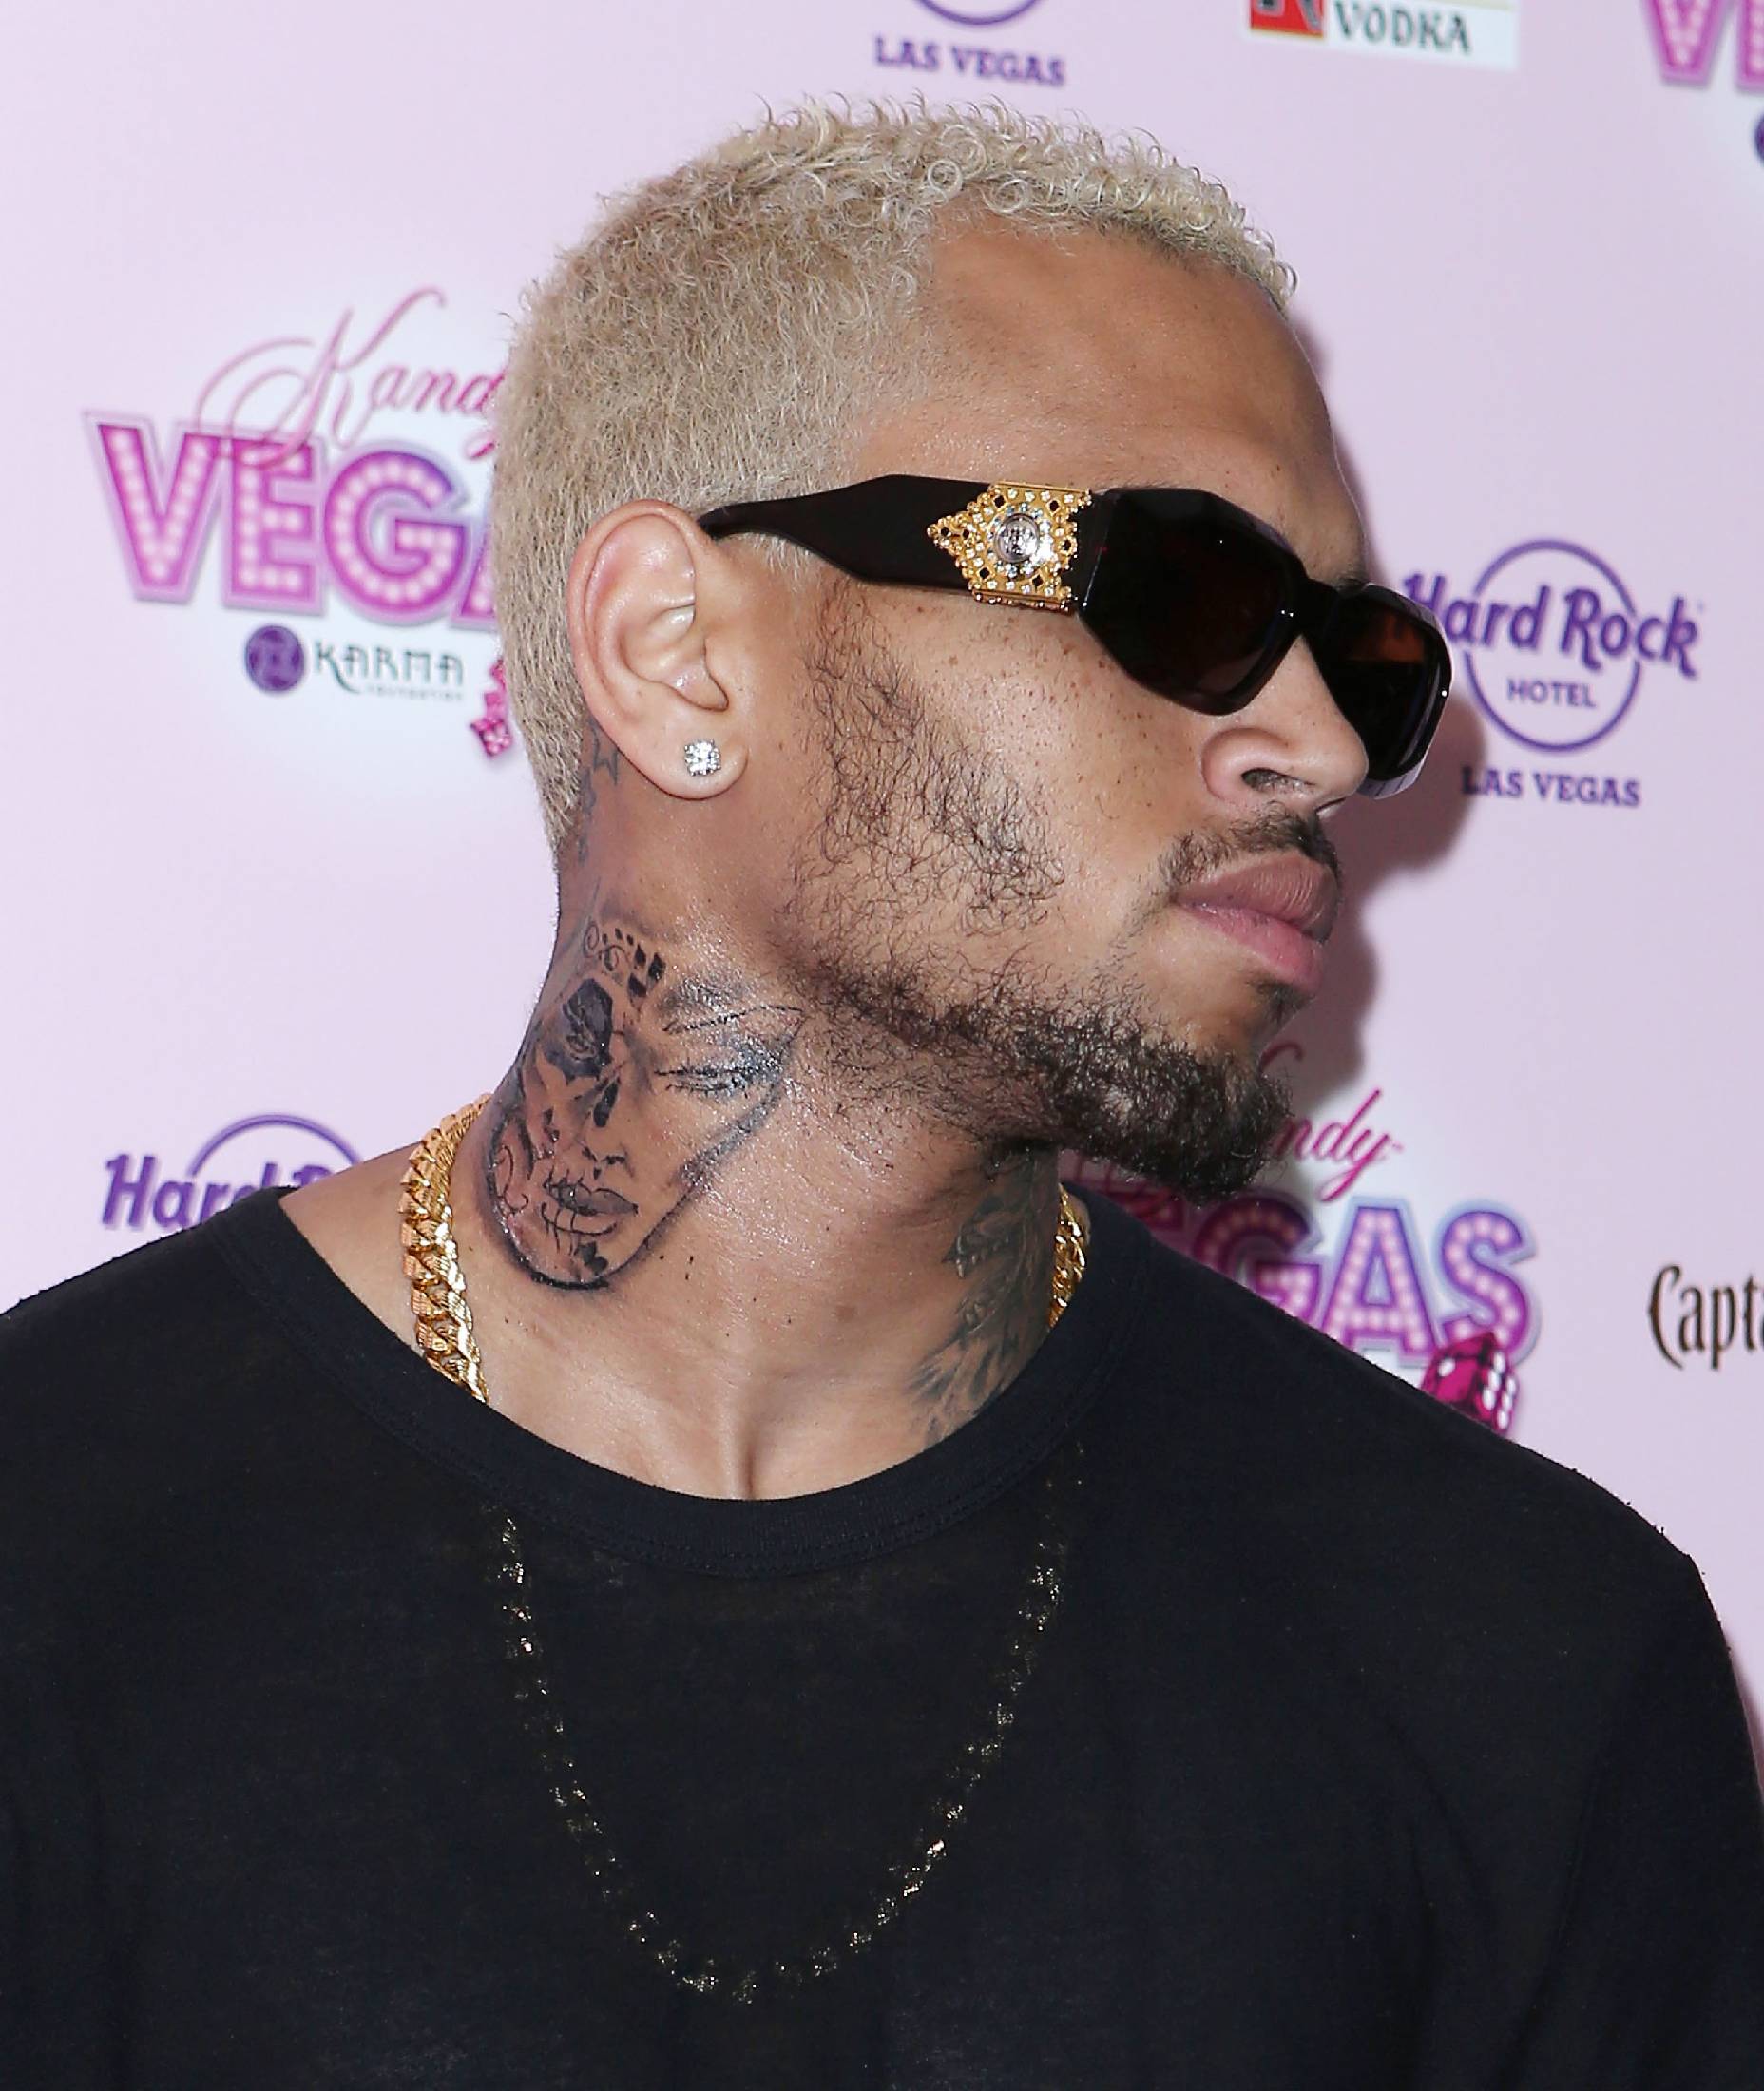 Chris Brown Chris Brown arrives to perform at Kandy Vegas at the Paradise Pool at Hardrock Hotel and Casino Las Vegas, Nevada - 01.09.12 Mandatory Credit: Judy Eddy/WENN.com